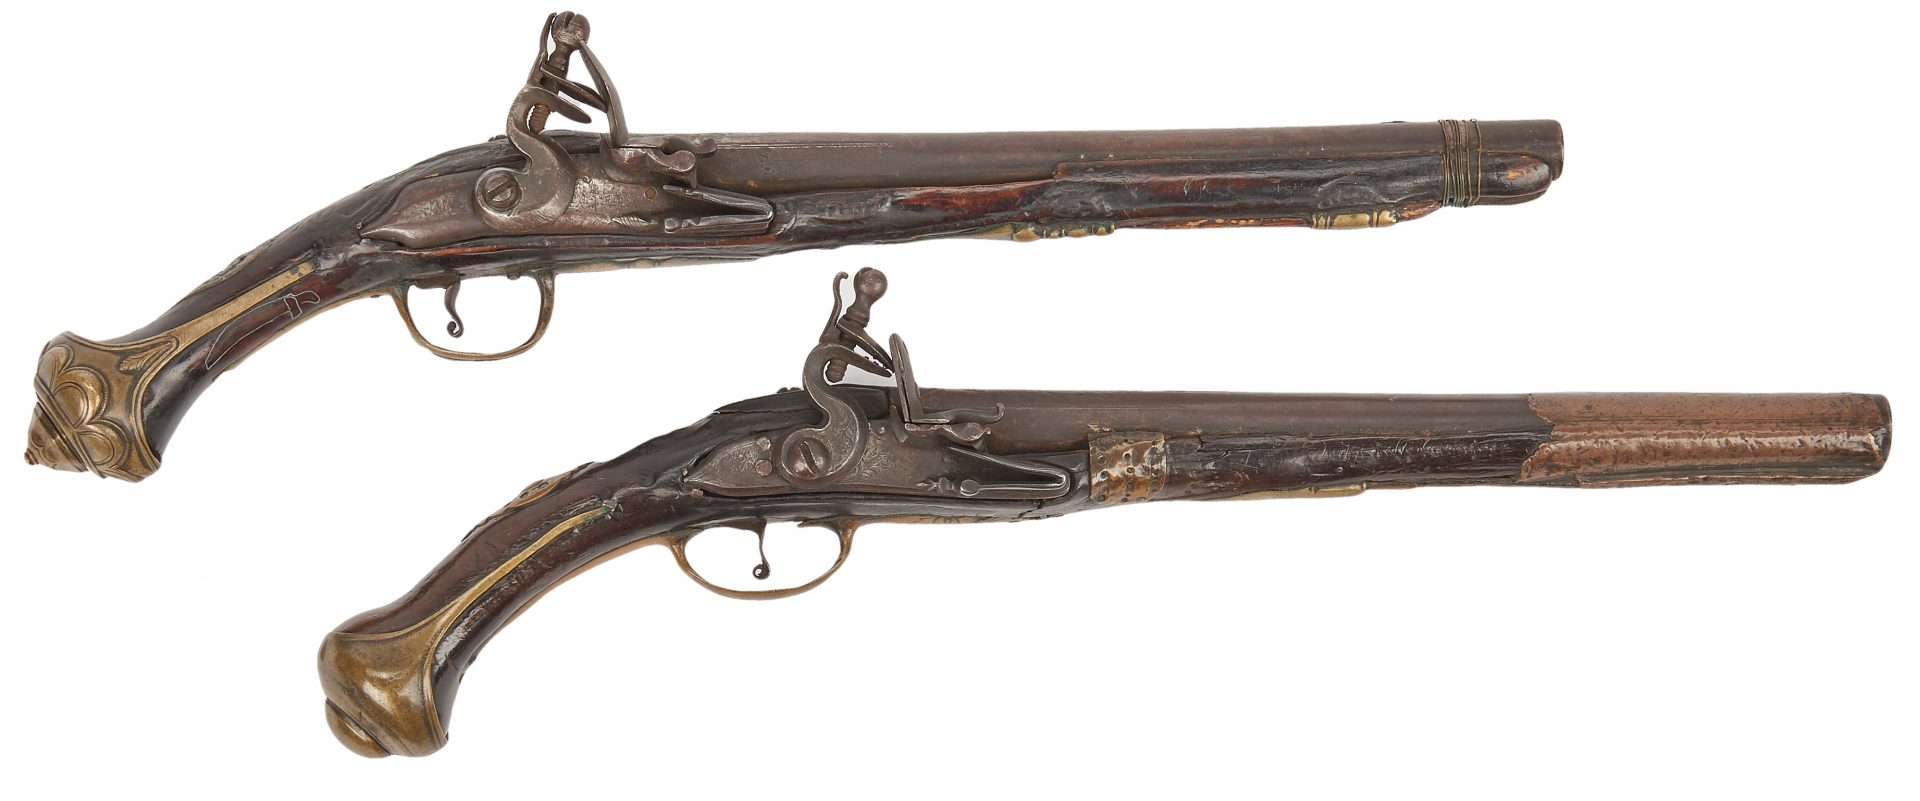 Two European flintlock pistols